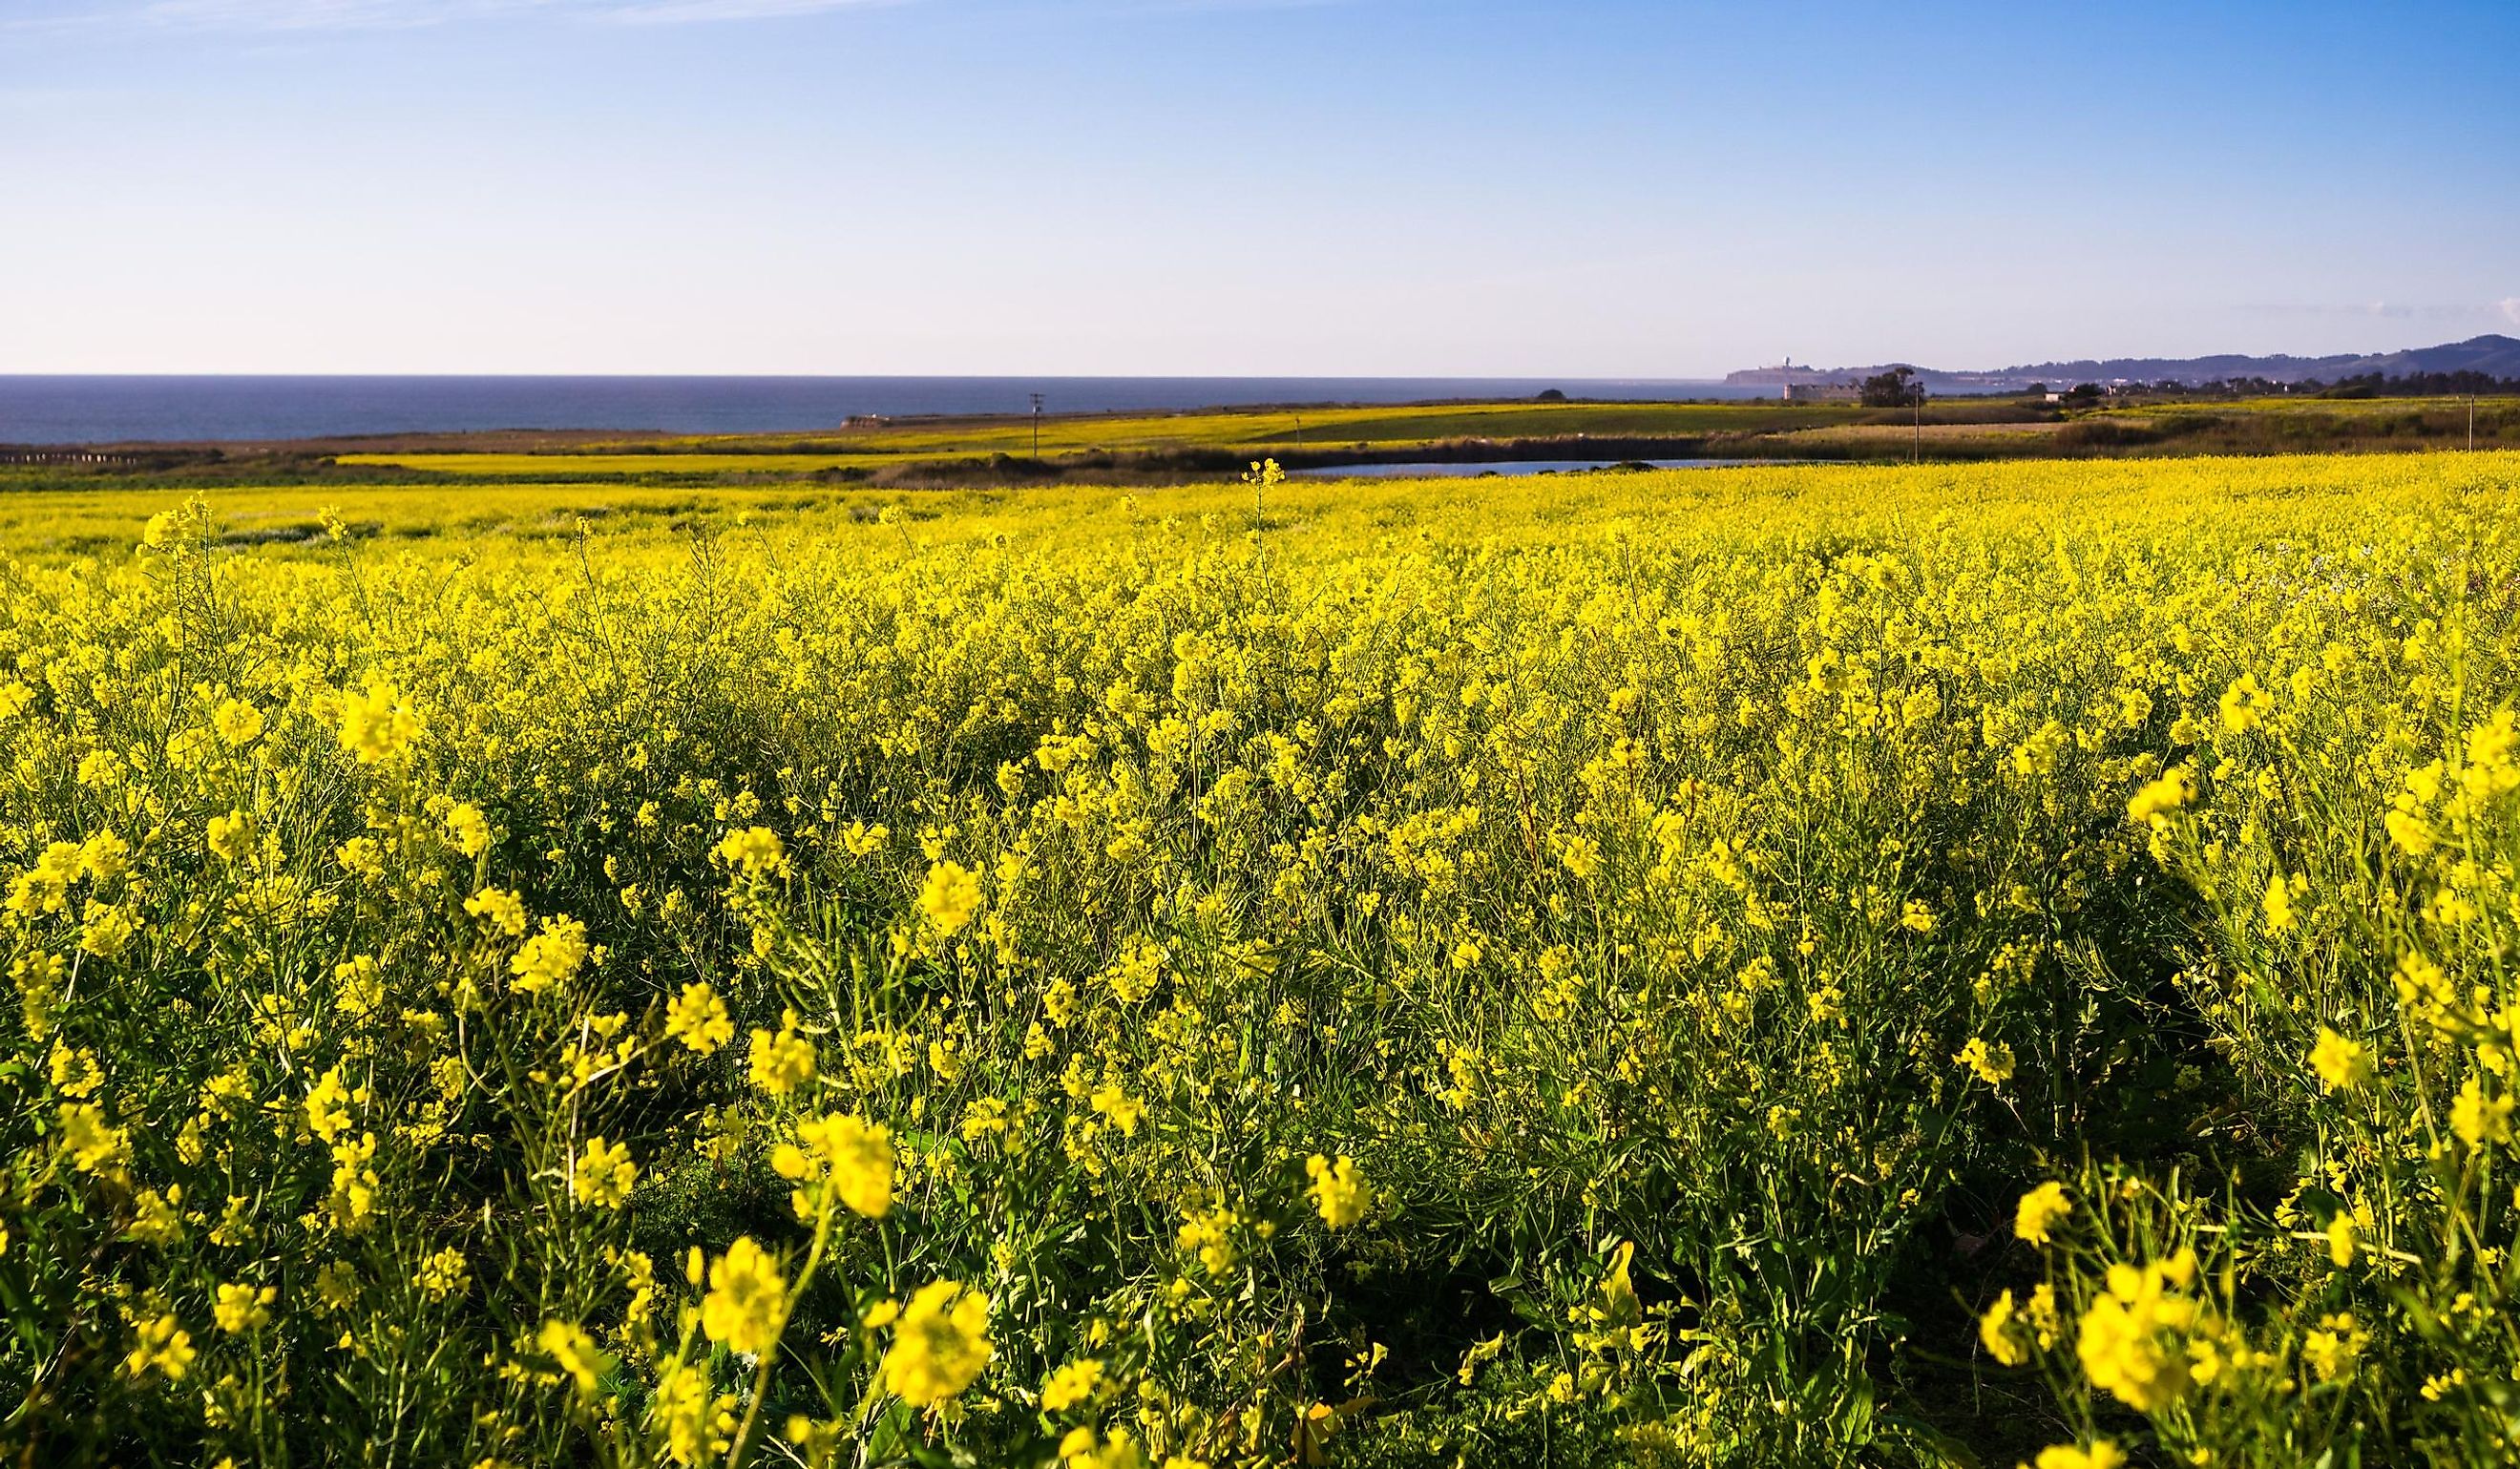 Fields of wild mustard on the Pacific Ocean coastline close to Half Moon Bay, California